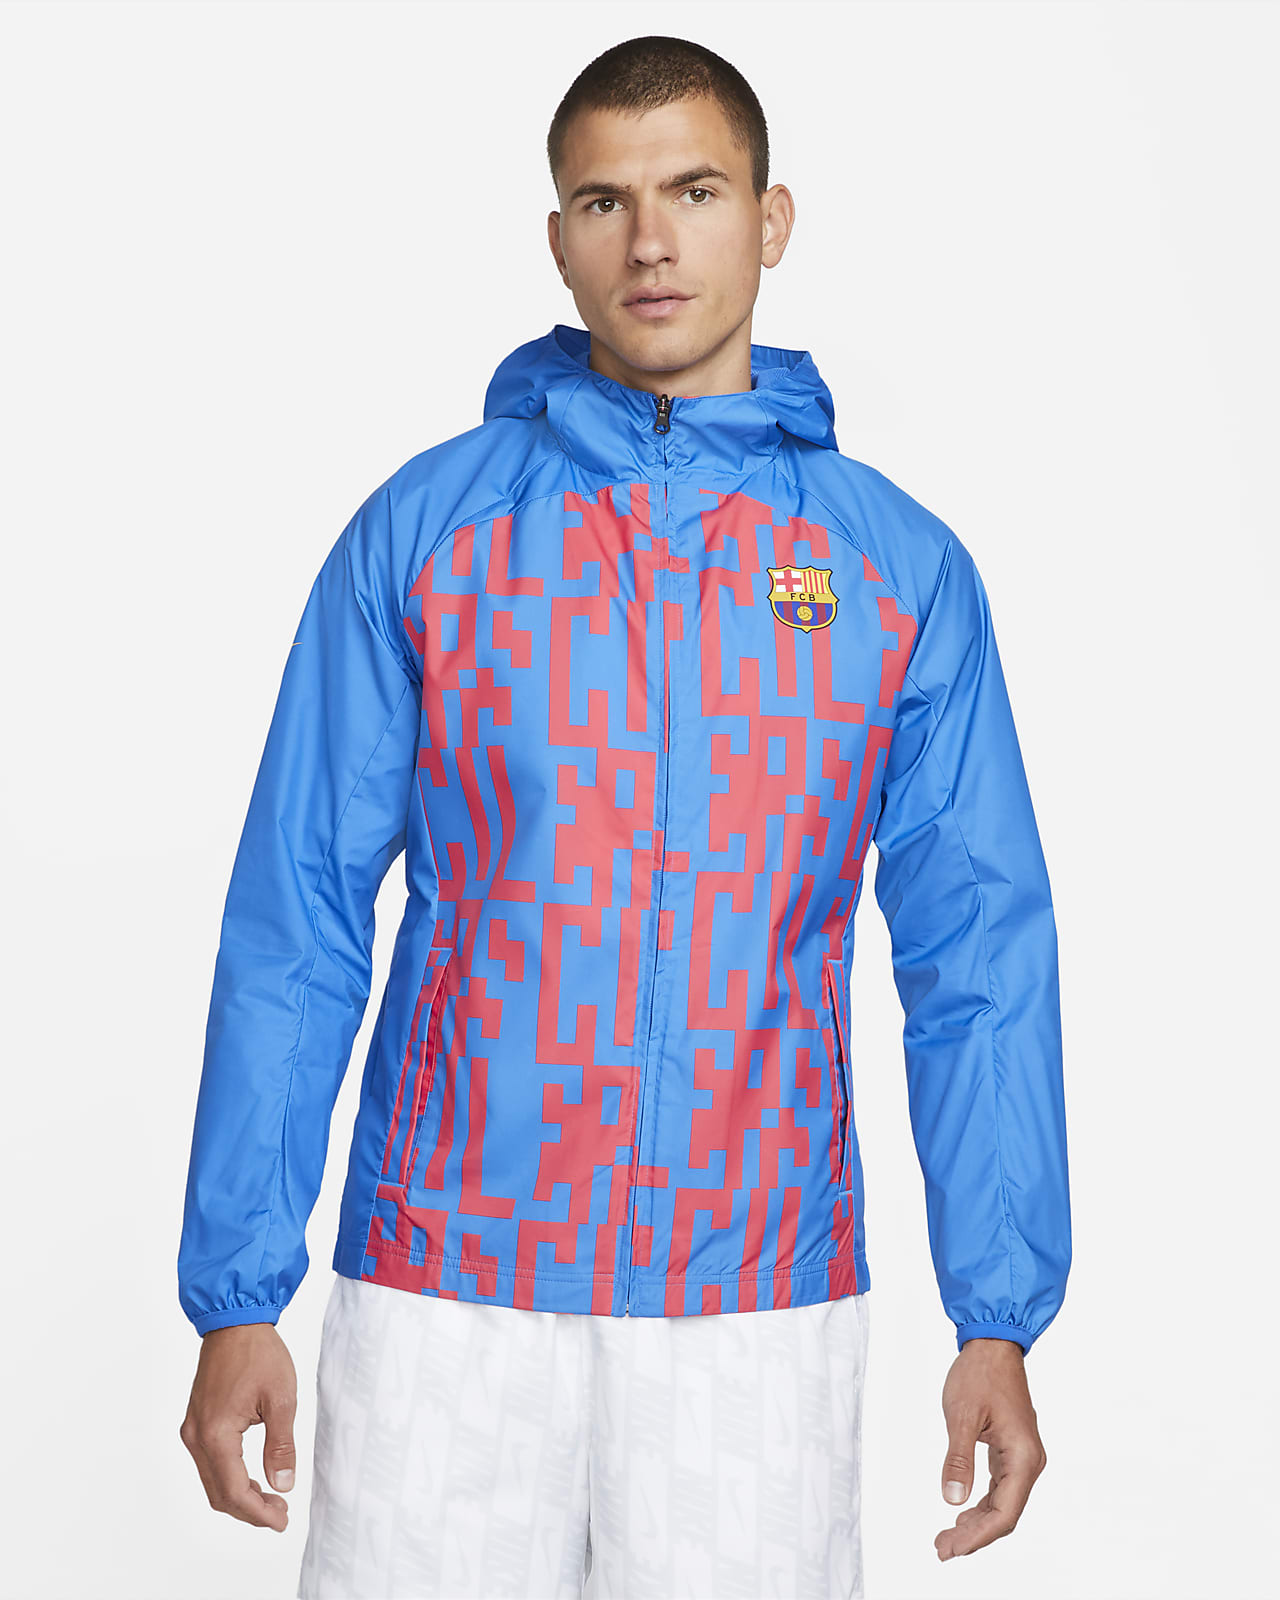 FC Barcelona AWF Men's Soccer Jacket